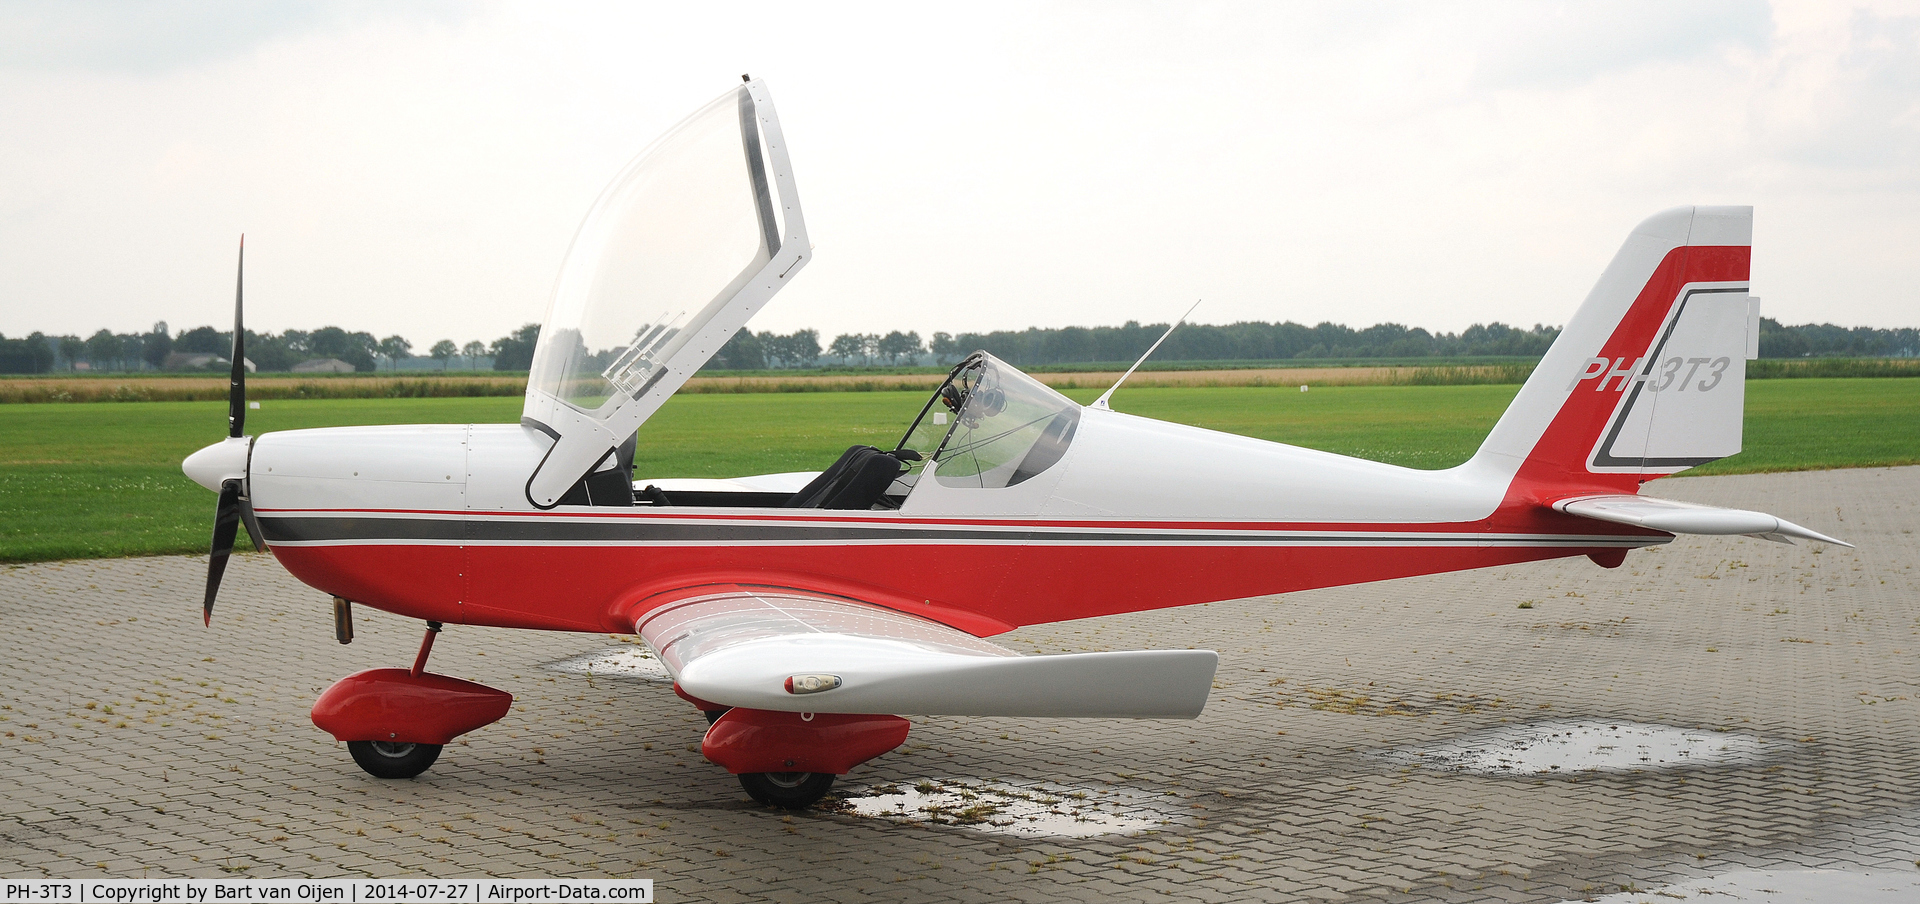 PH-3T3, Evektor EV-97 Model 2000 C/N 1144, Photo taken at Vledderveen Airport -Holland.